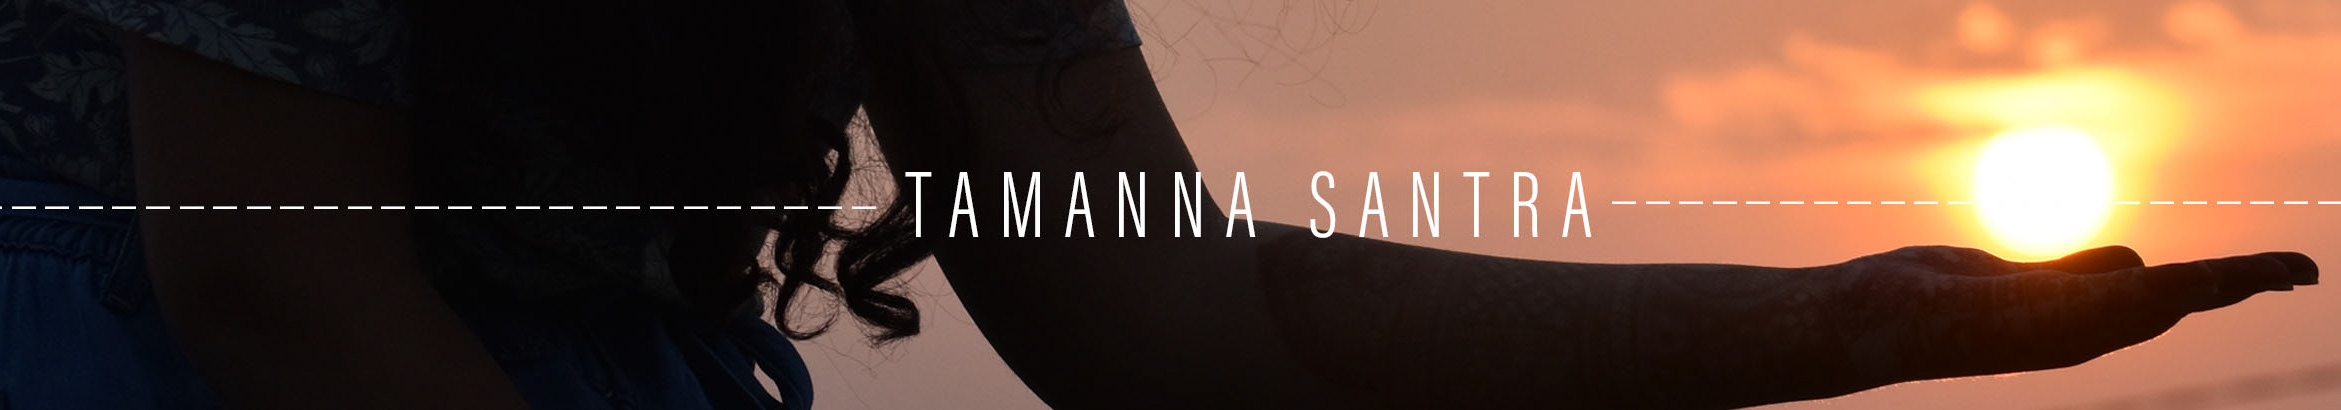 Tamanna Santra's profile banner